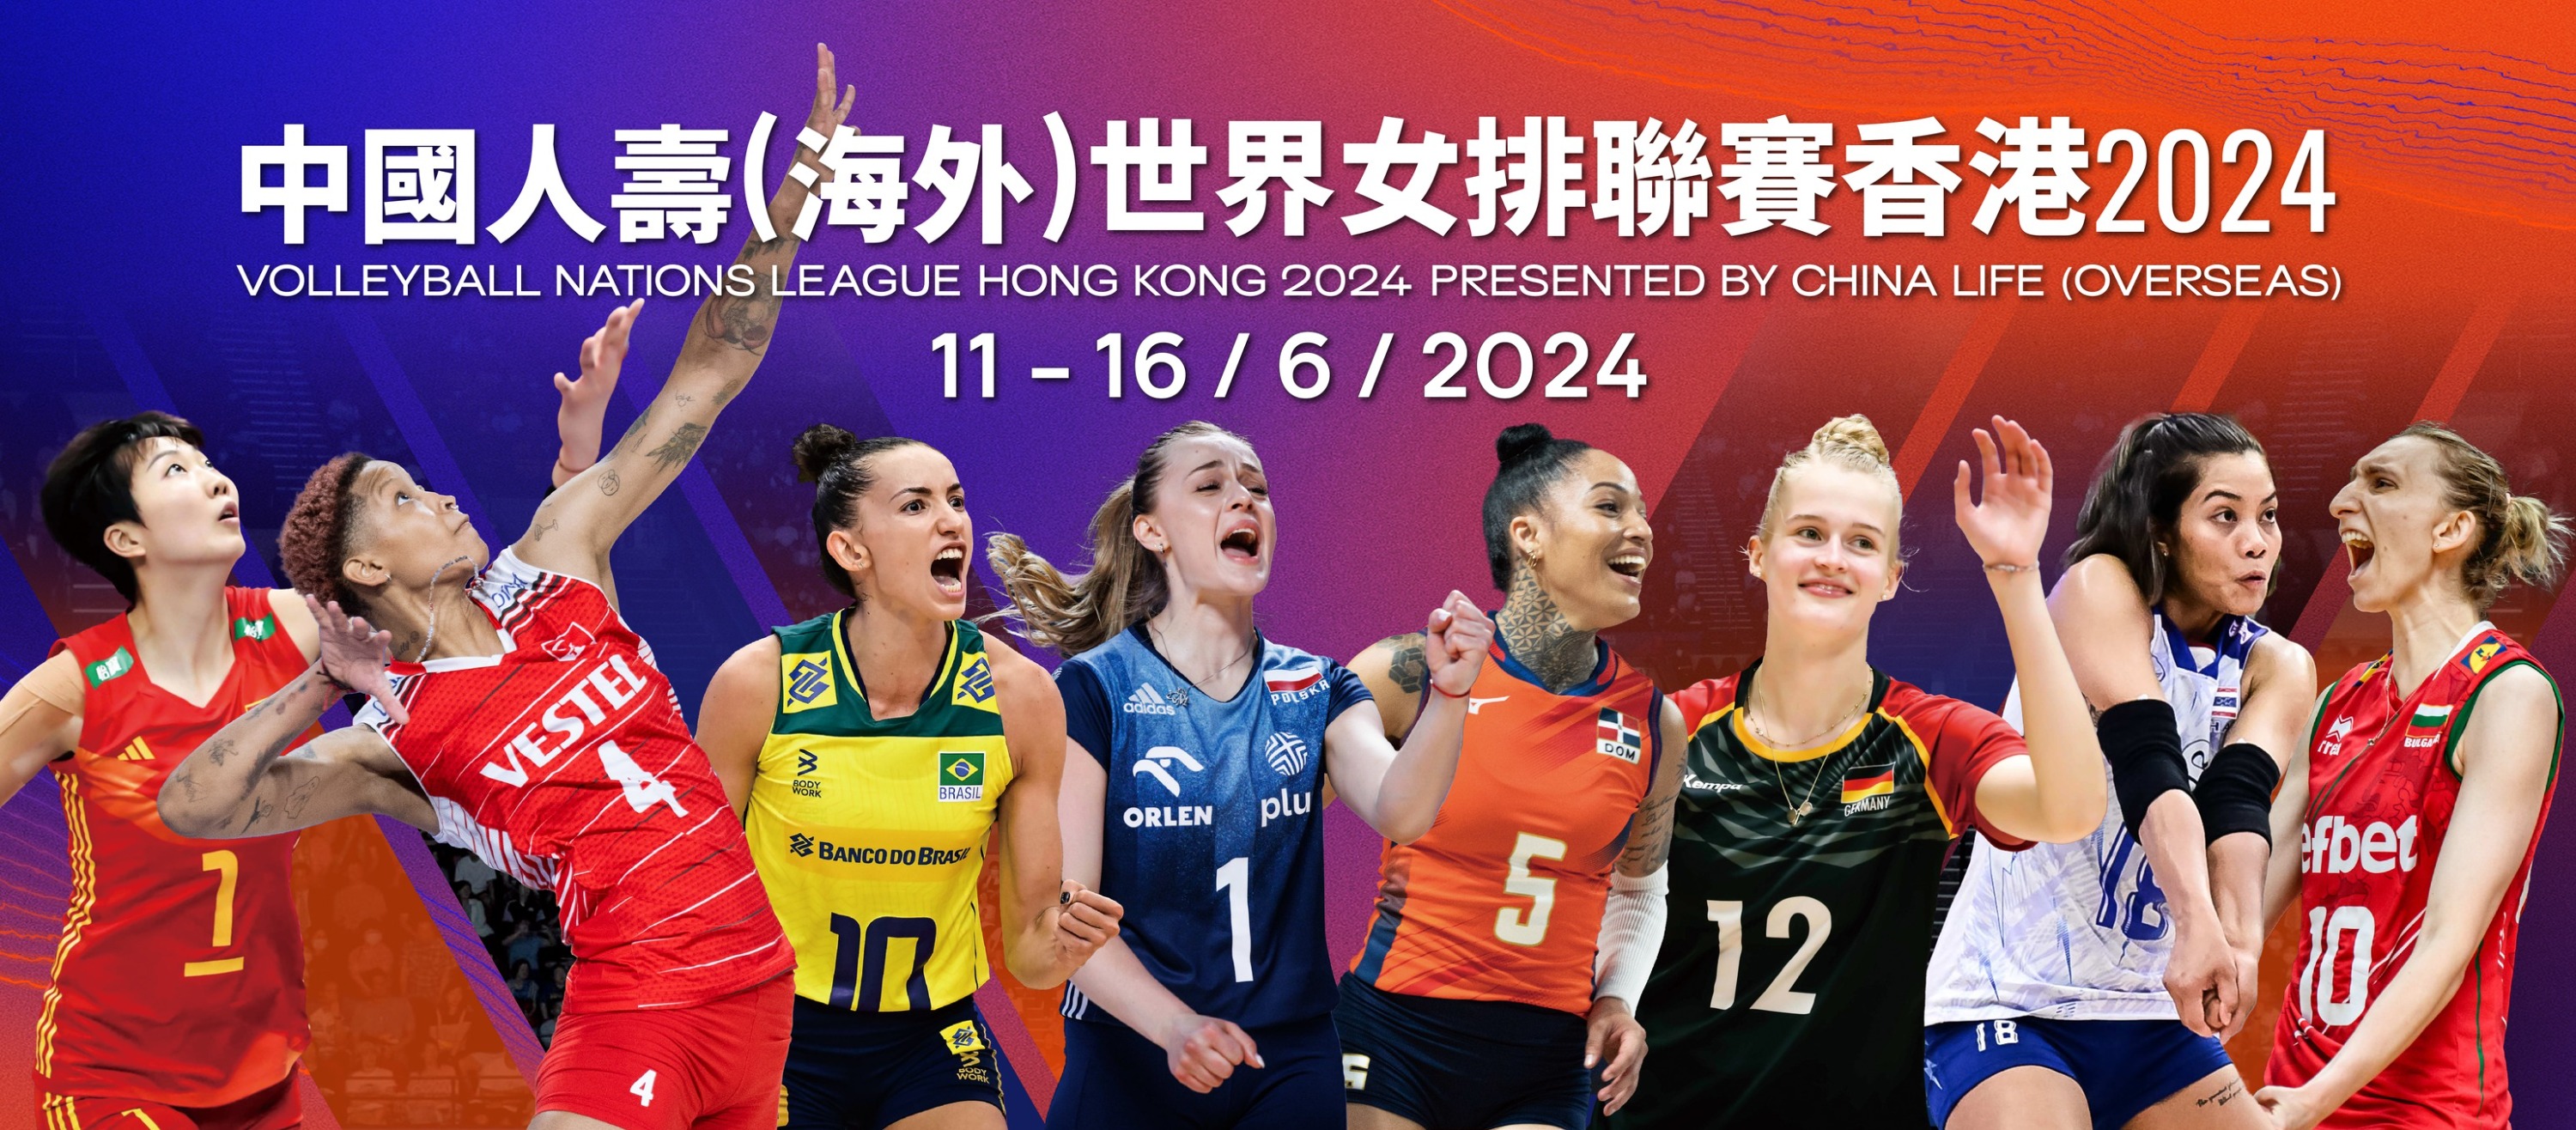 Volleyball Nations League Hong Kong 2024 presented